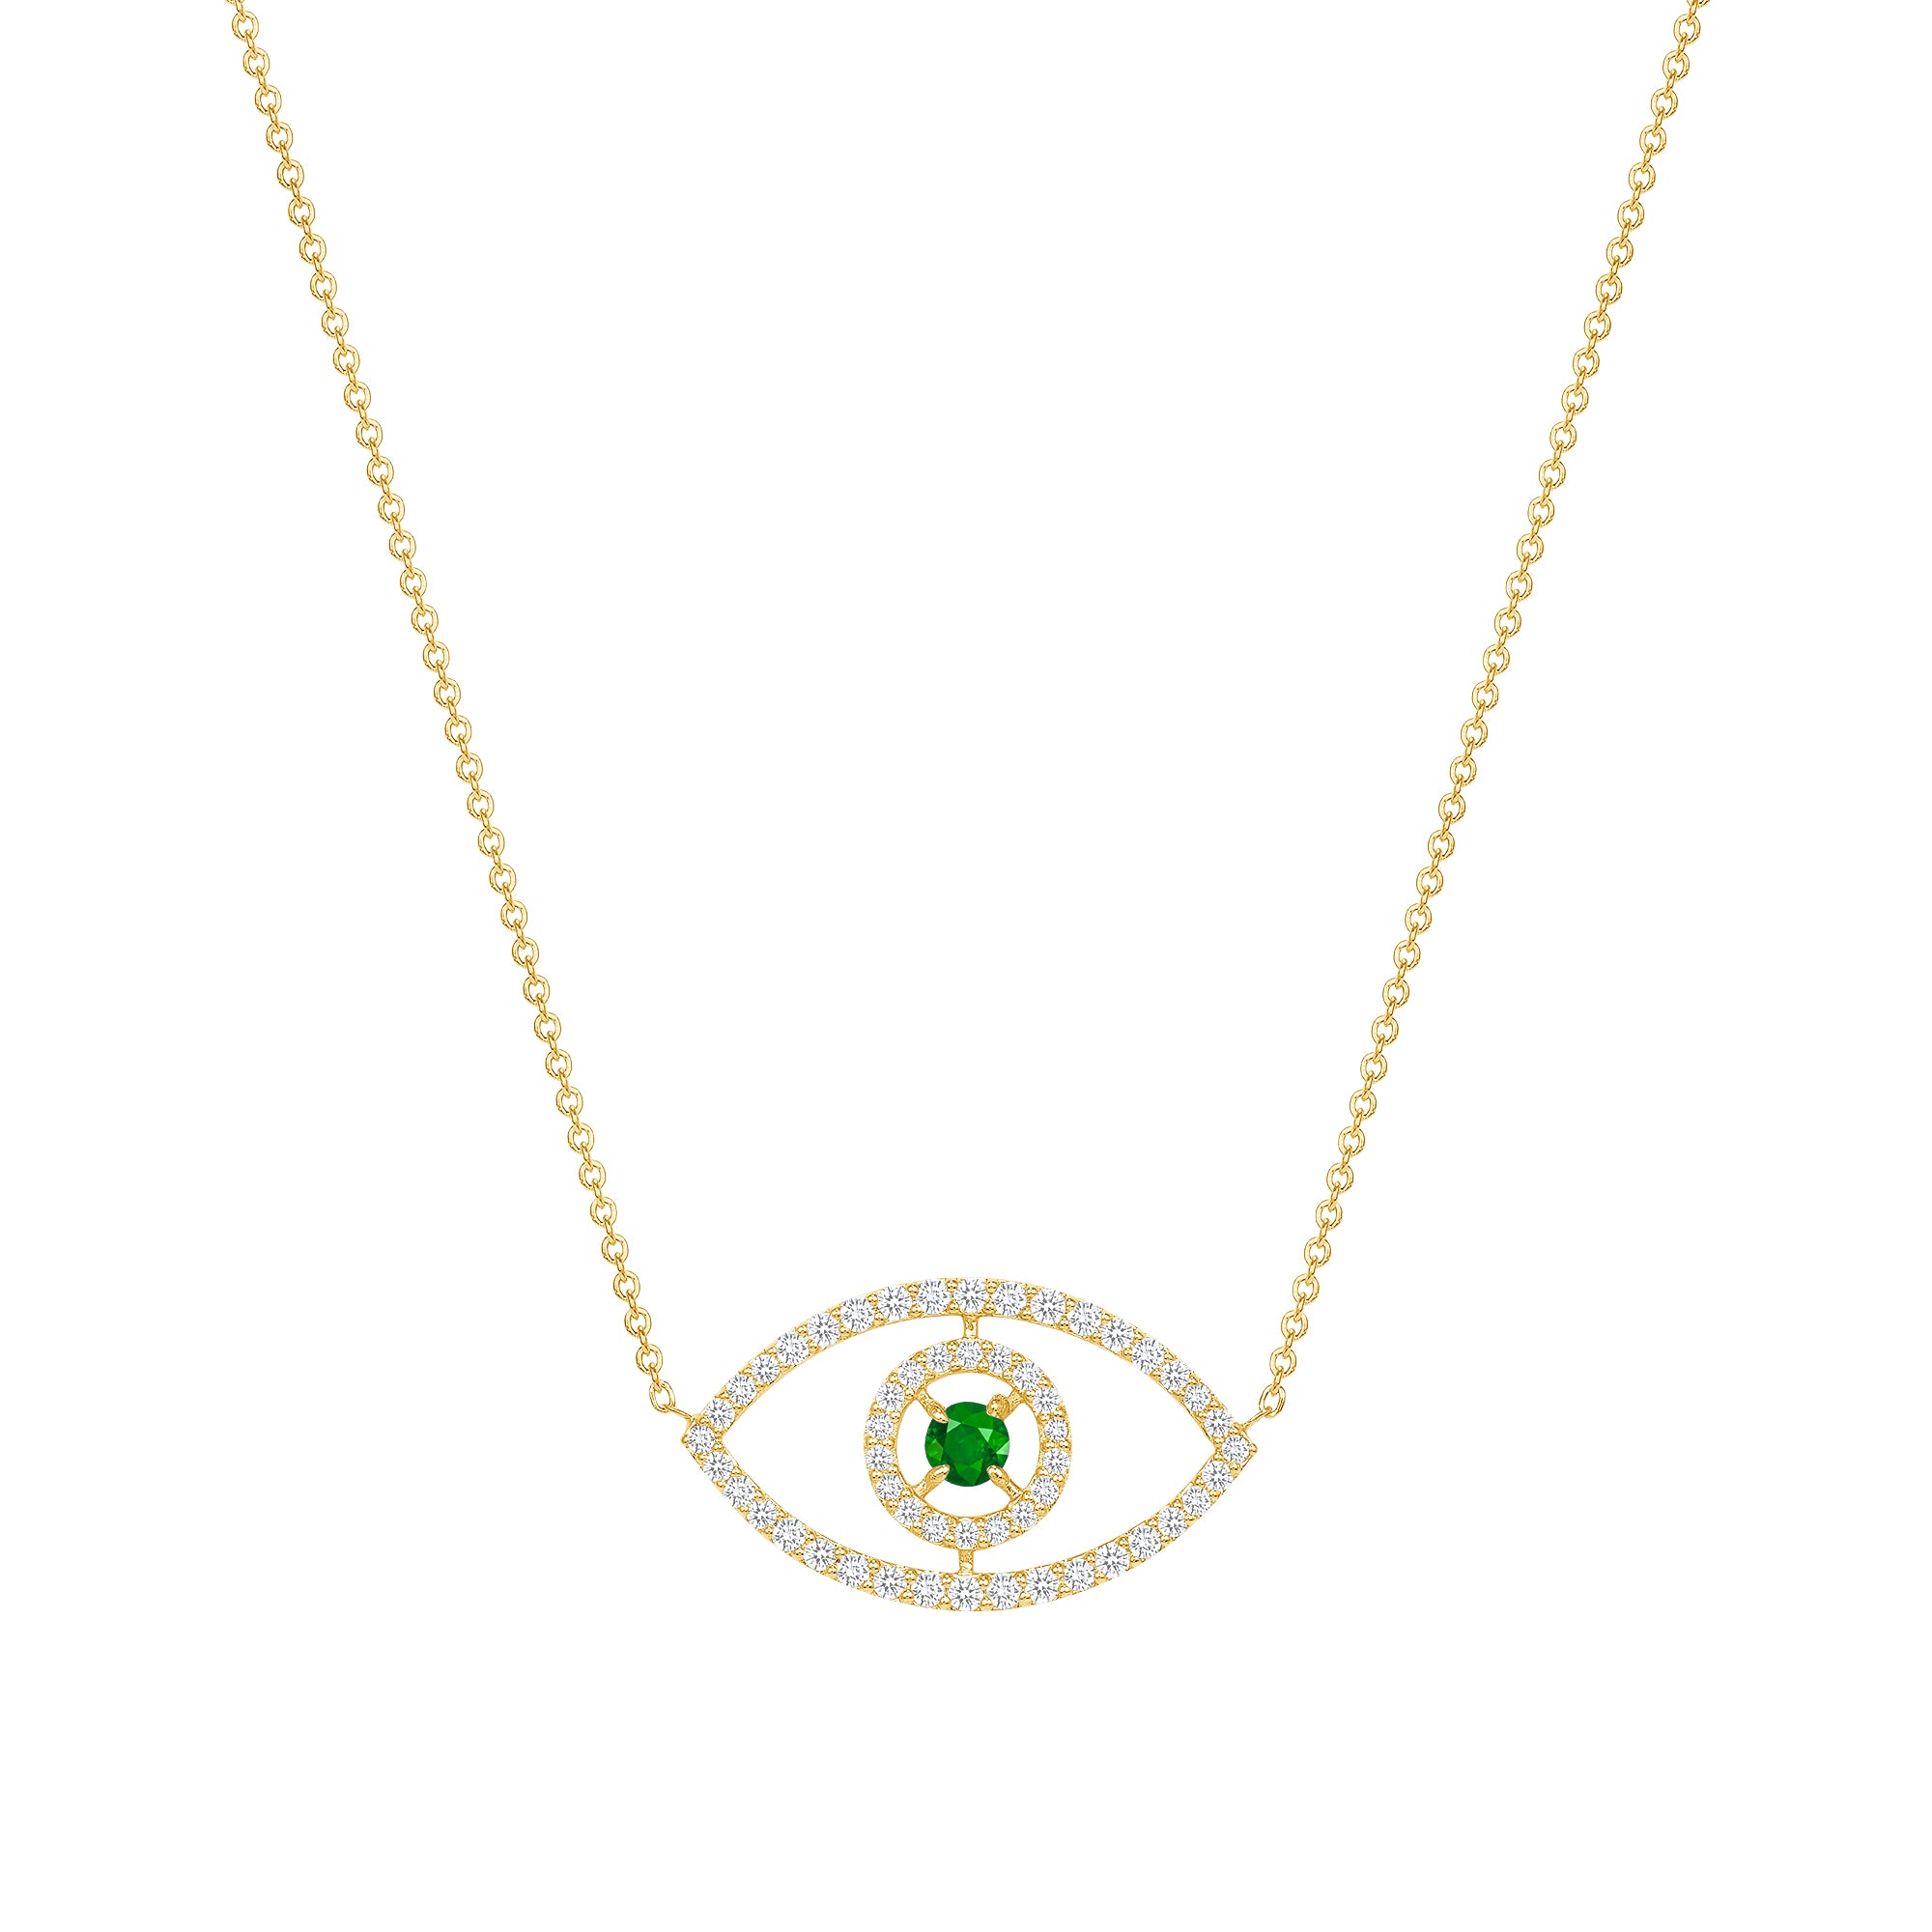 14 karat gold diamond evil eye necklace with emerald vardui kara